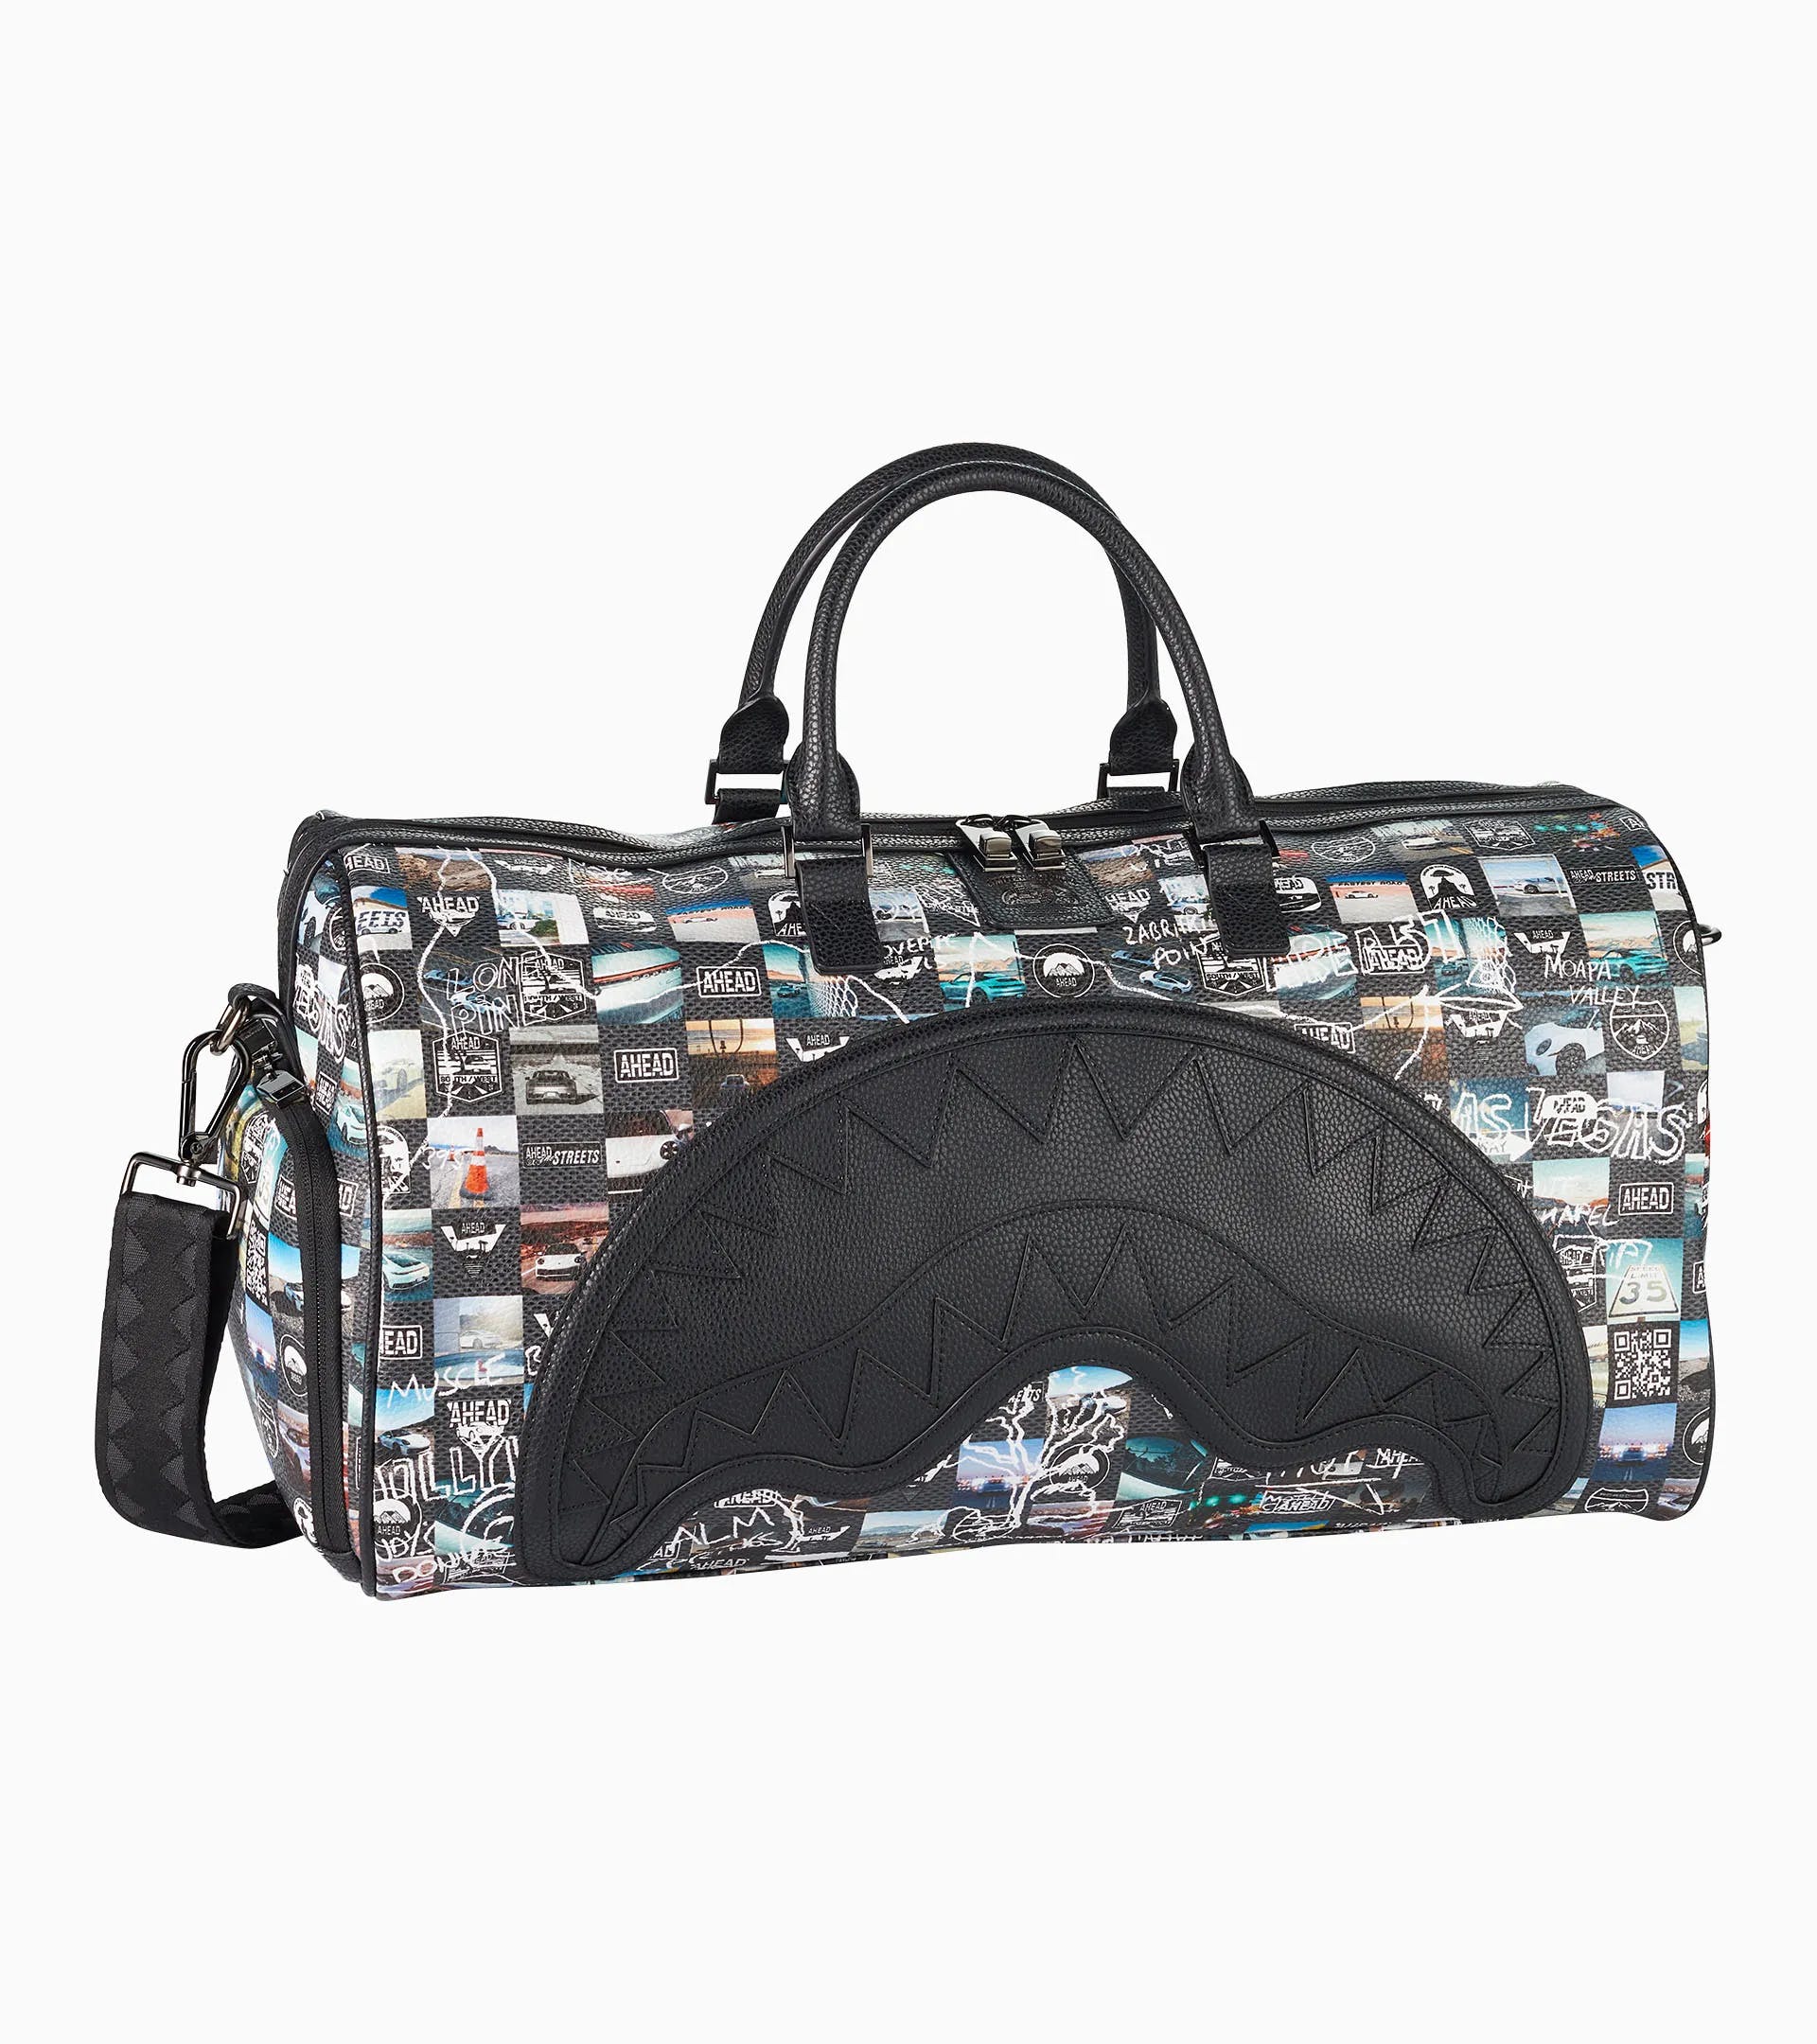 AHEAD duffle bag – Limited Edition 1